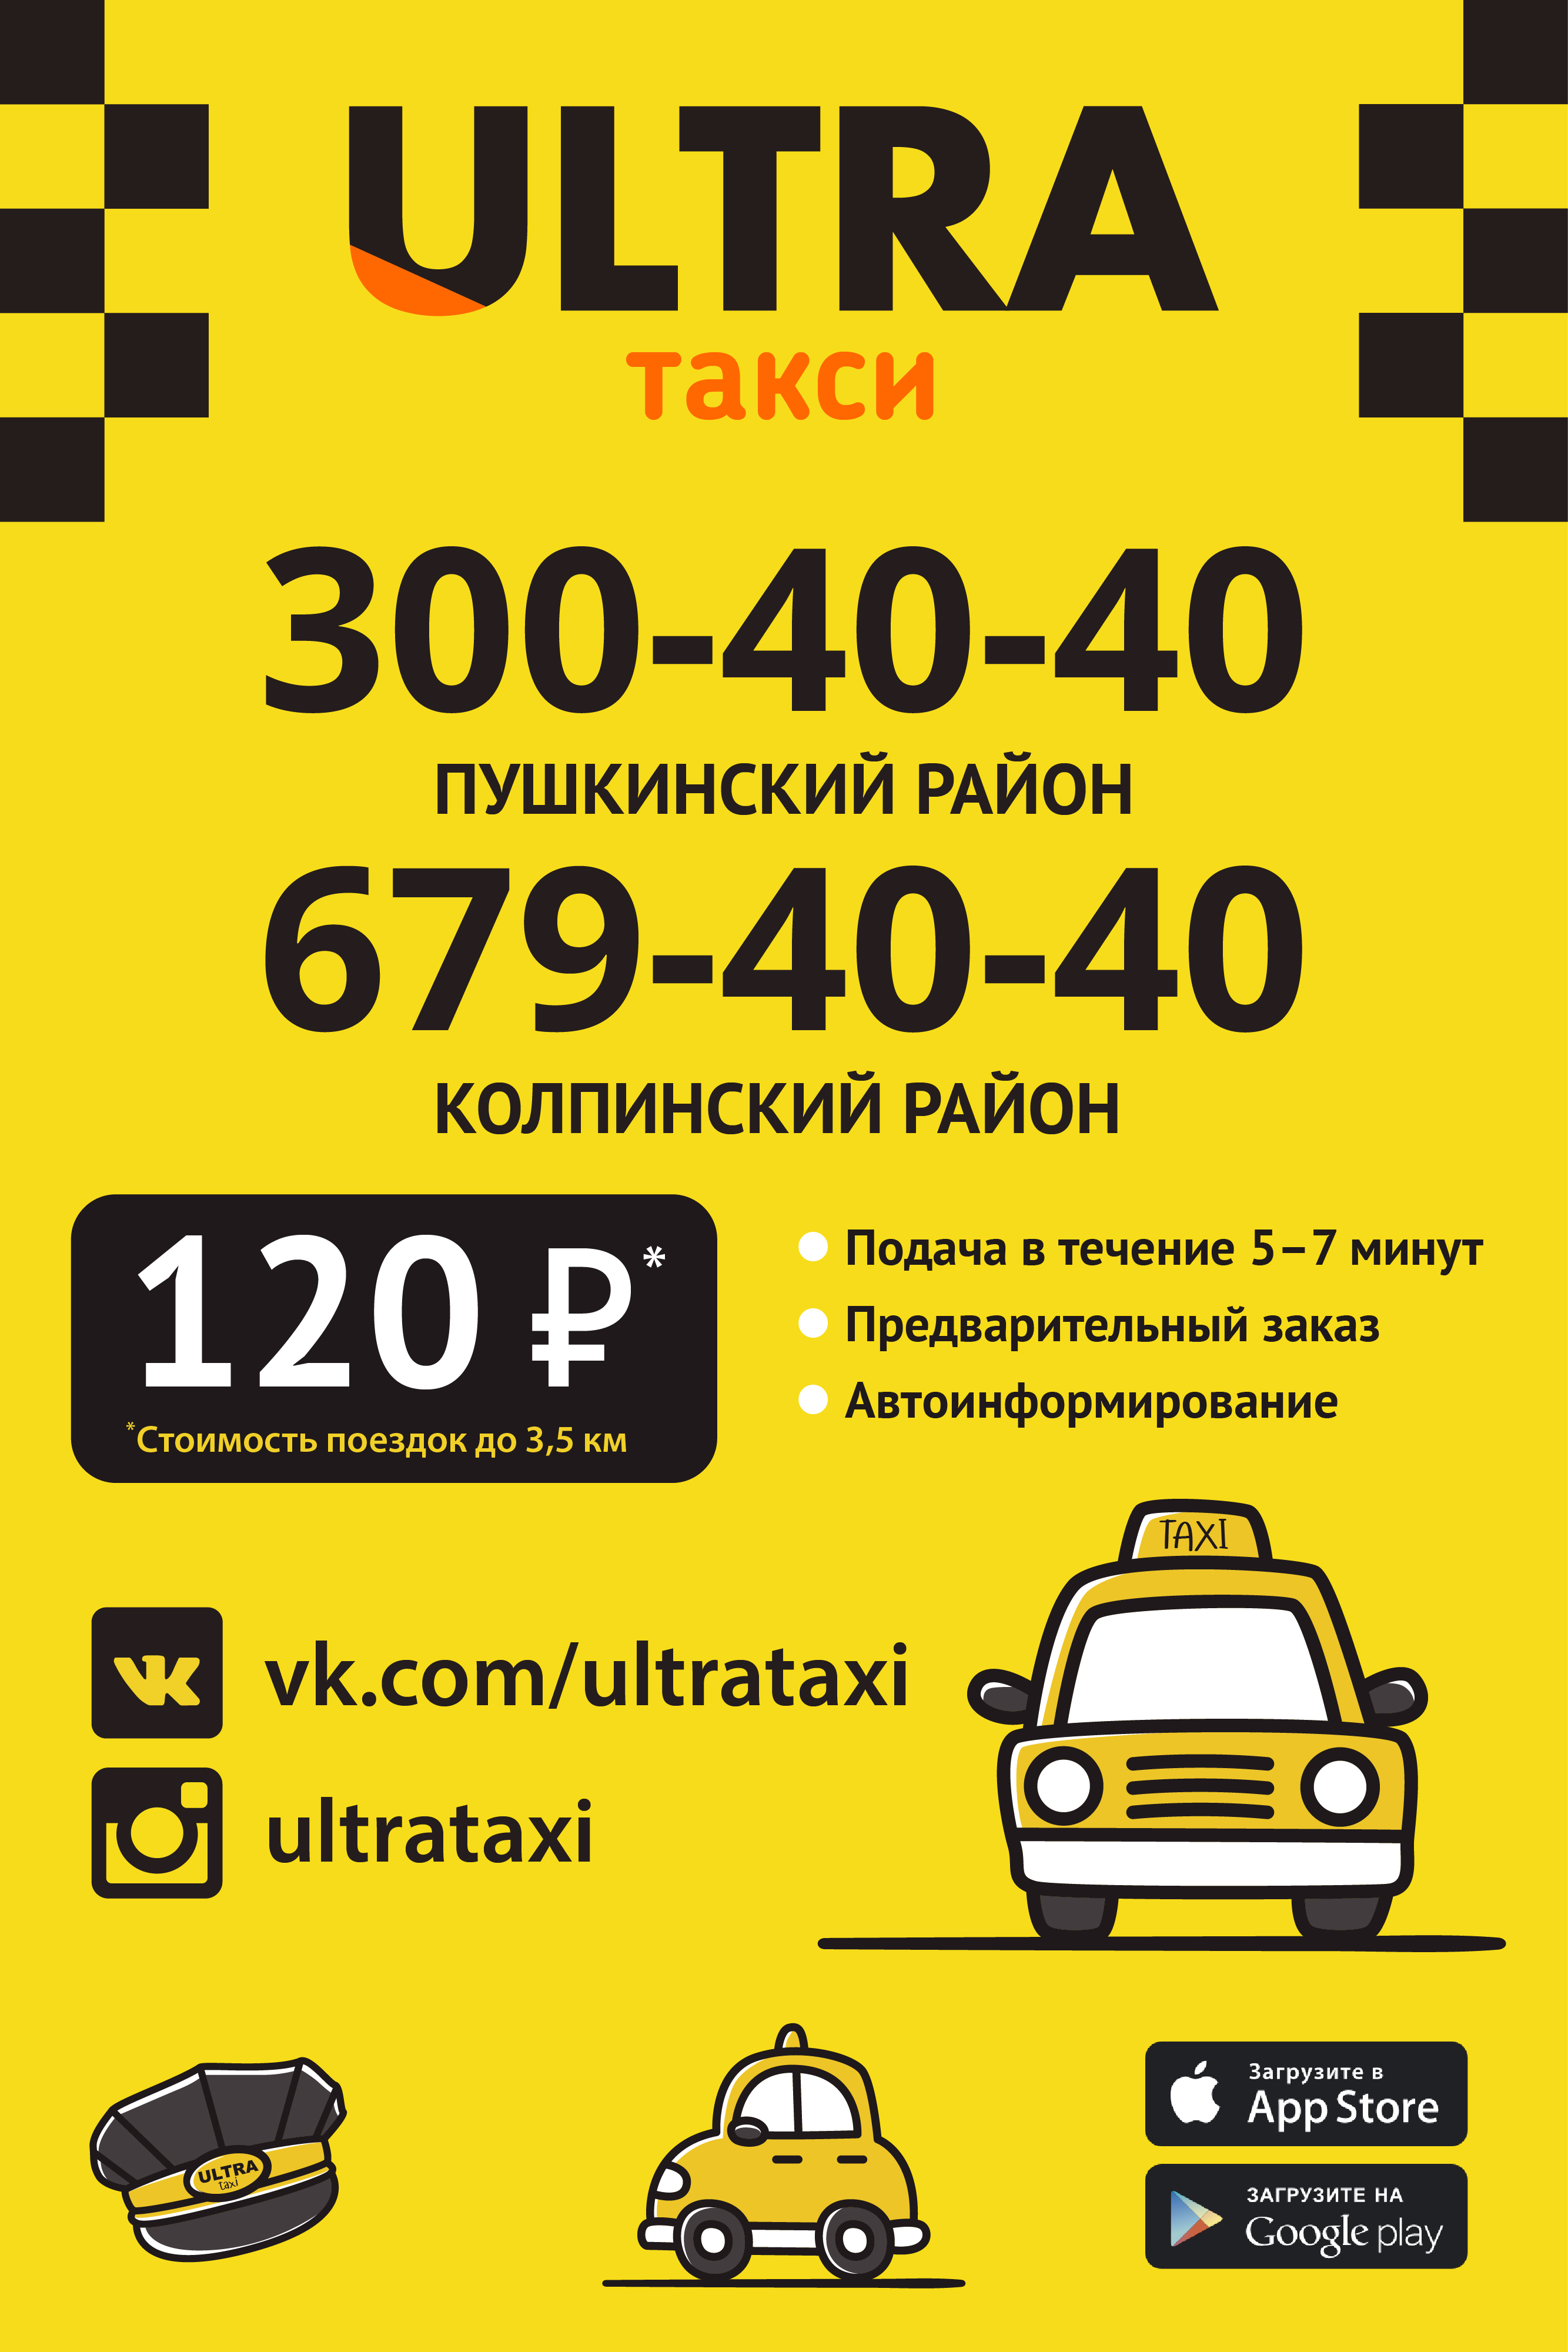 Номер телефона такси в саратове